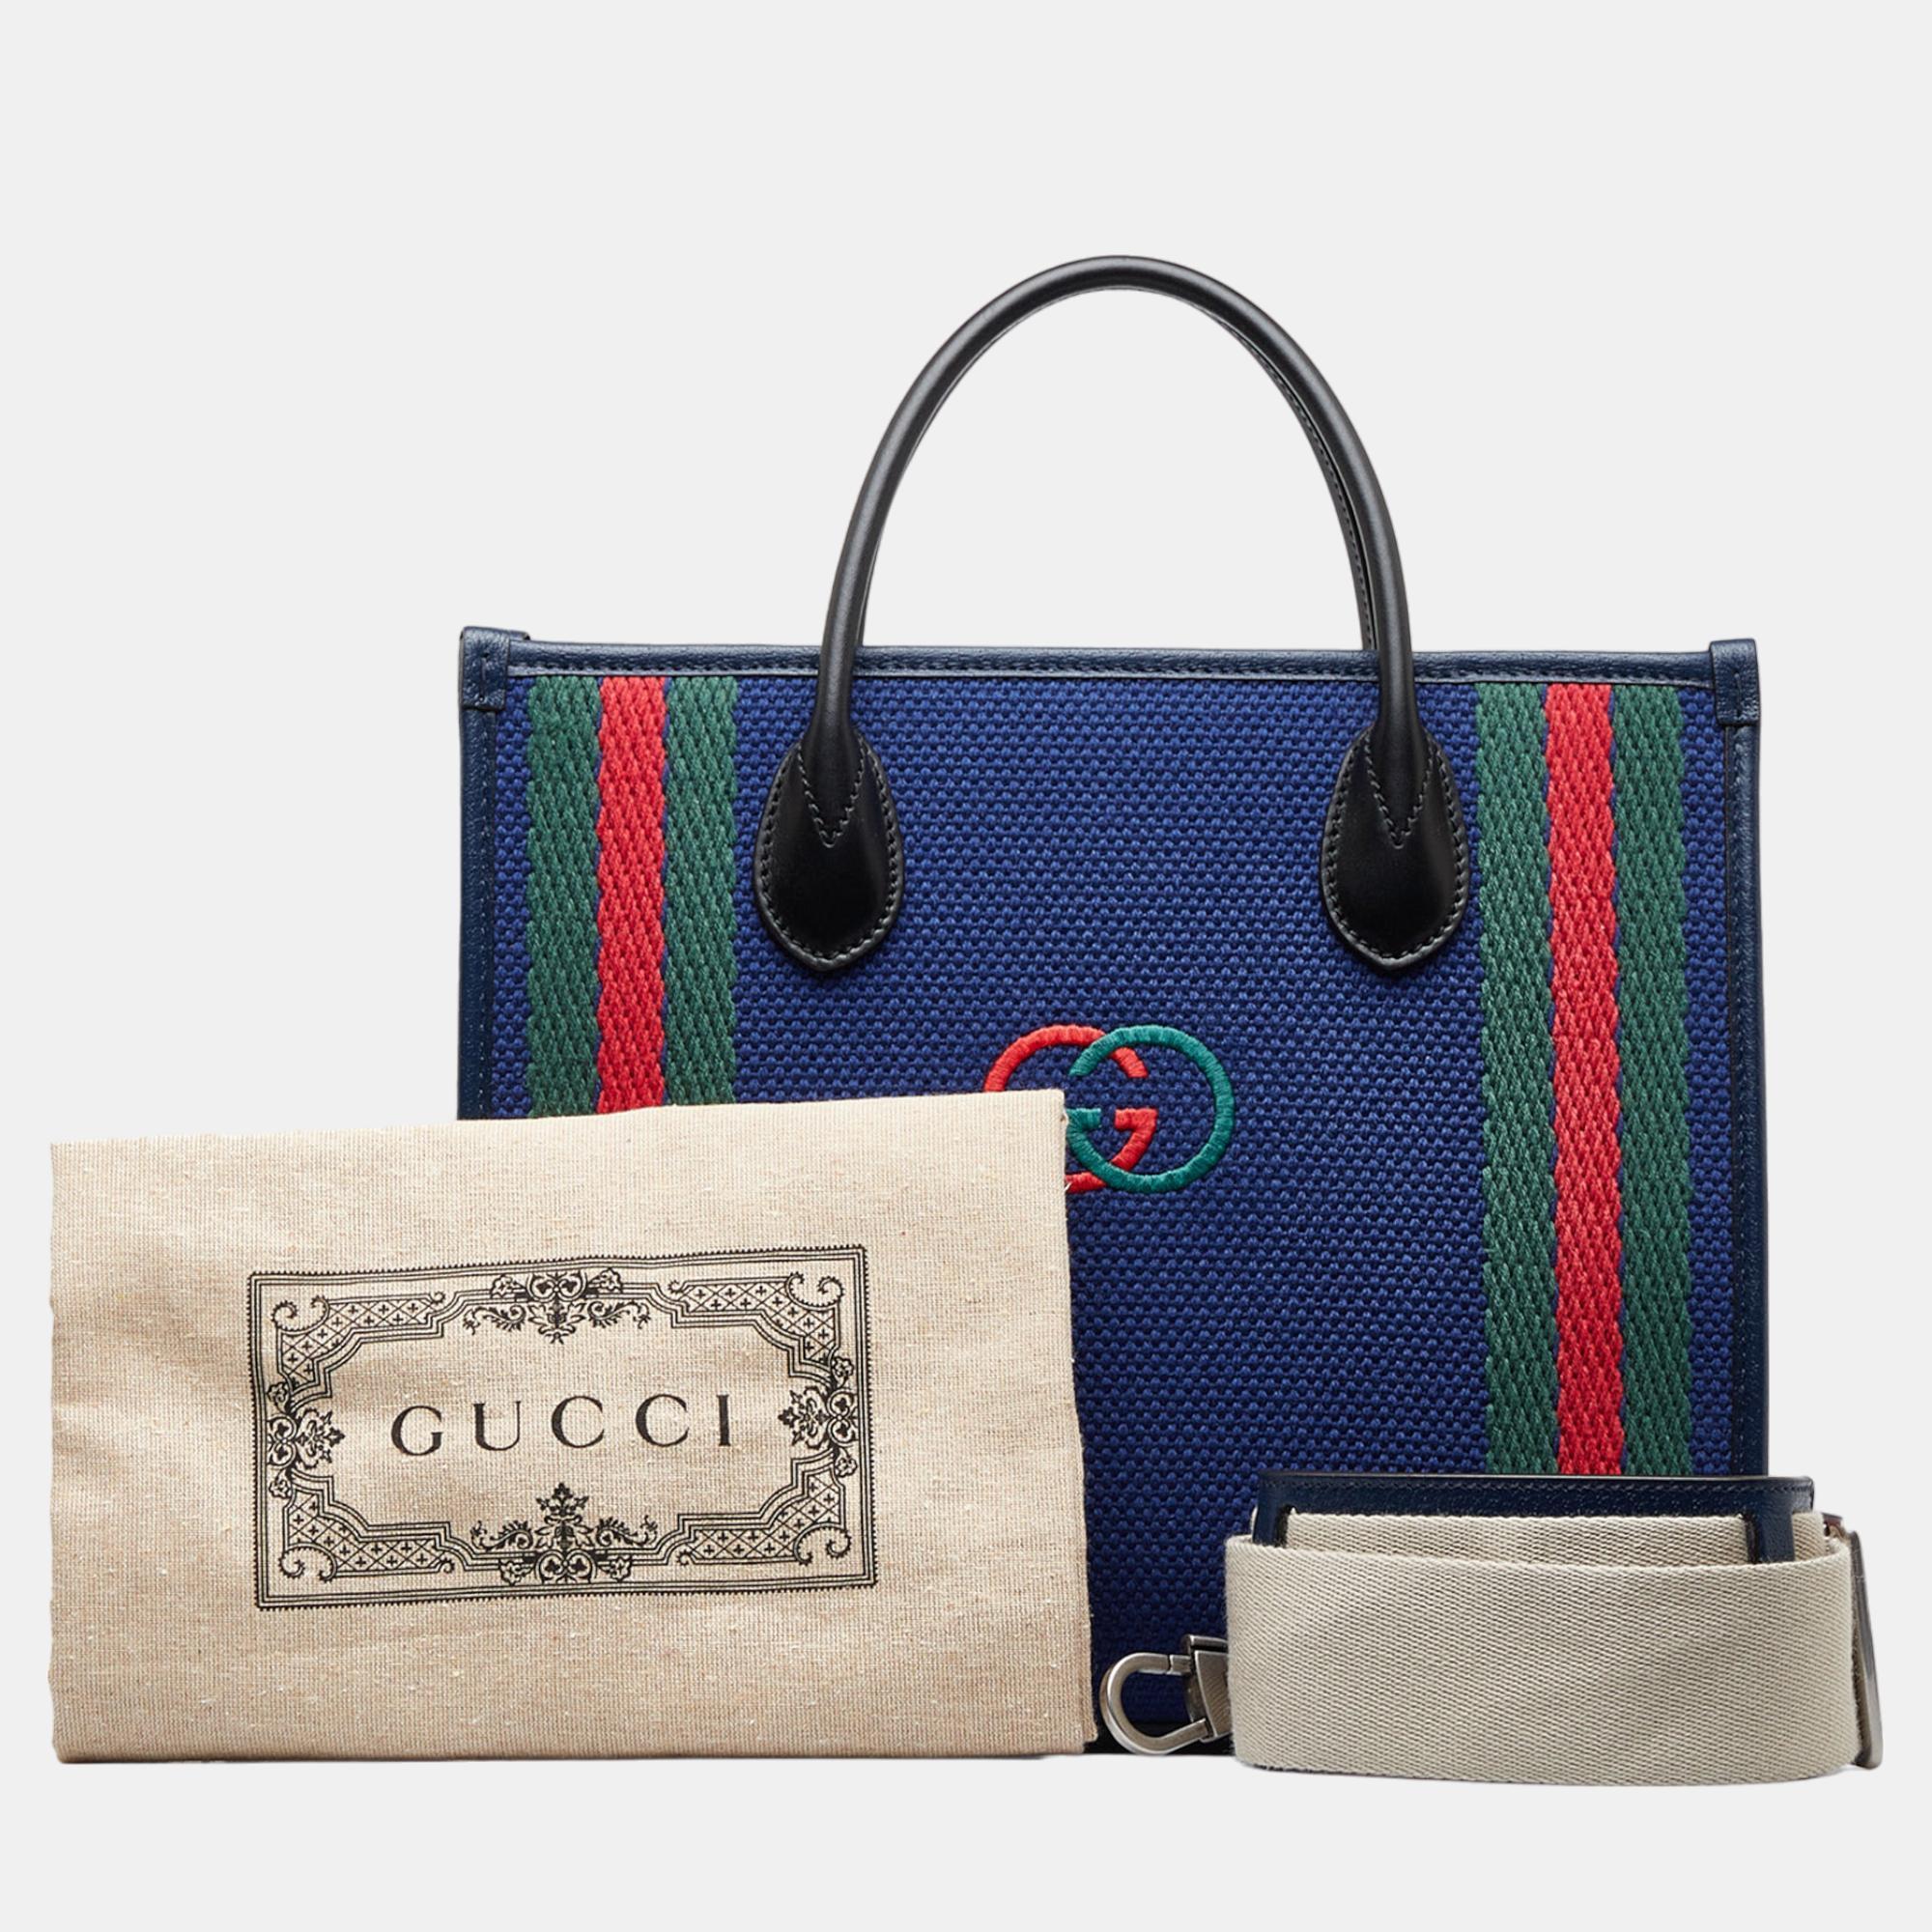 Gucci Multicolour Interlocking G Satchel